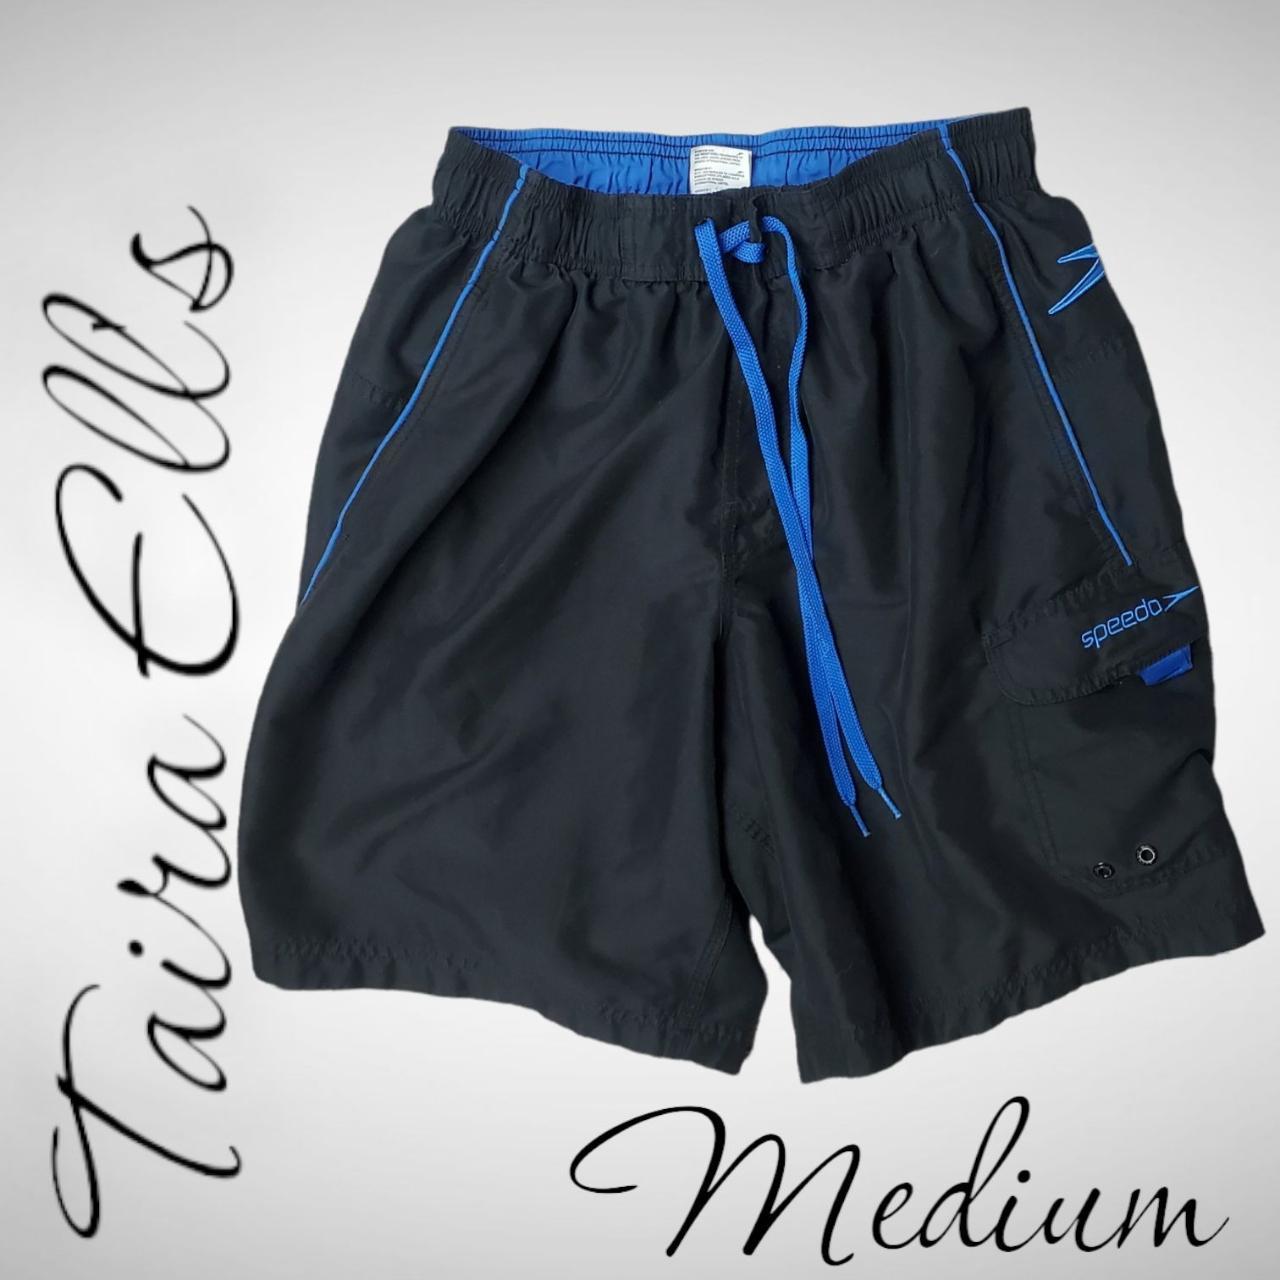 Product Image 1 - Med Speedo Board/Swim Shorts
Waist: 13
Length: